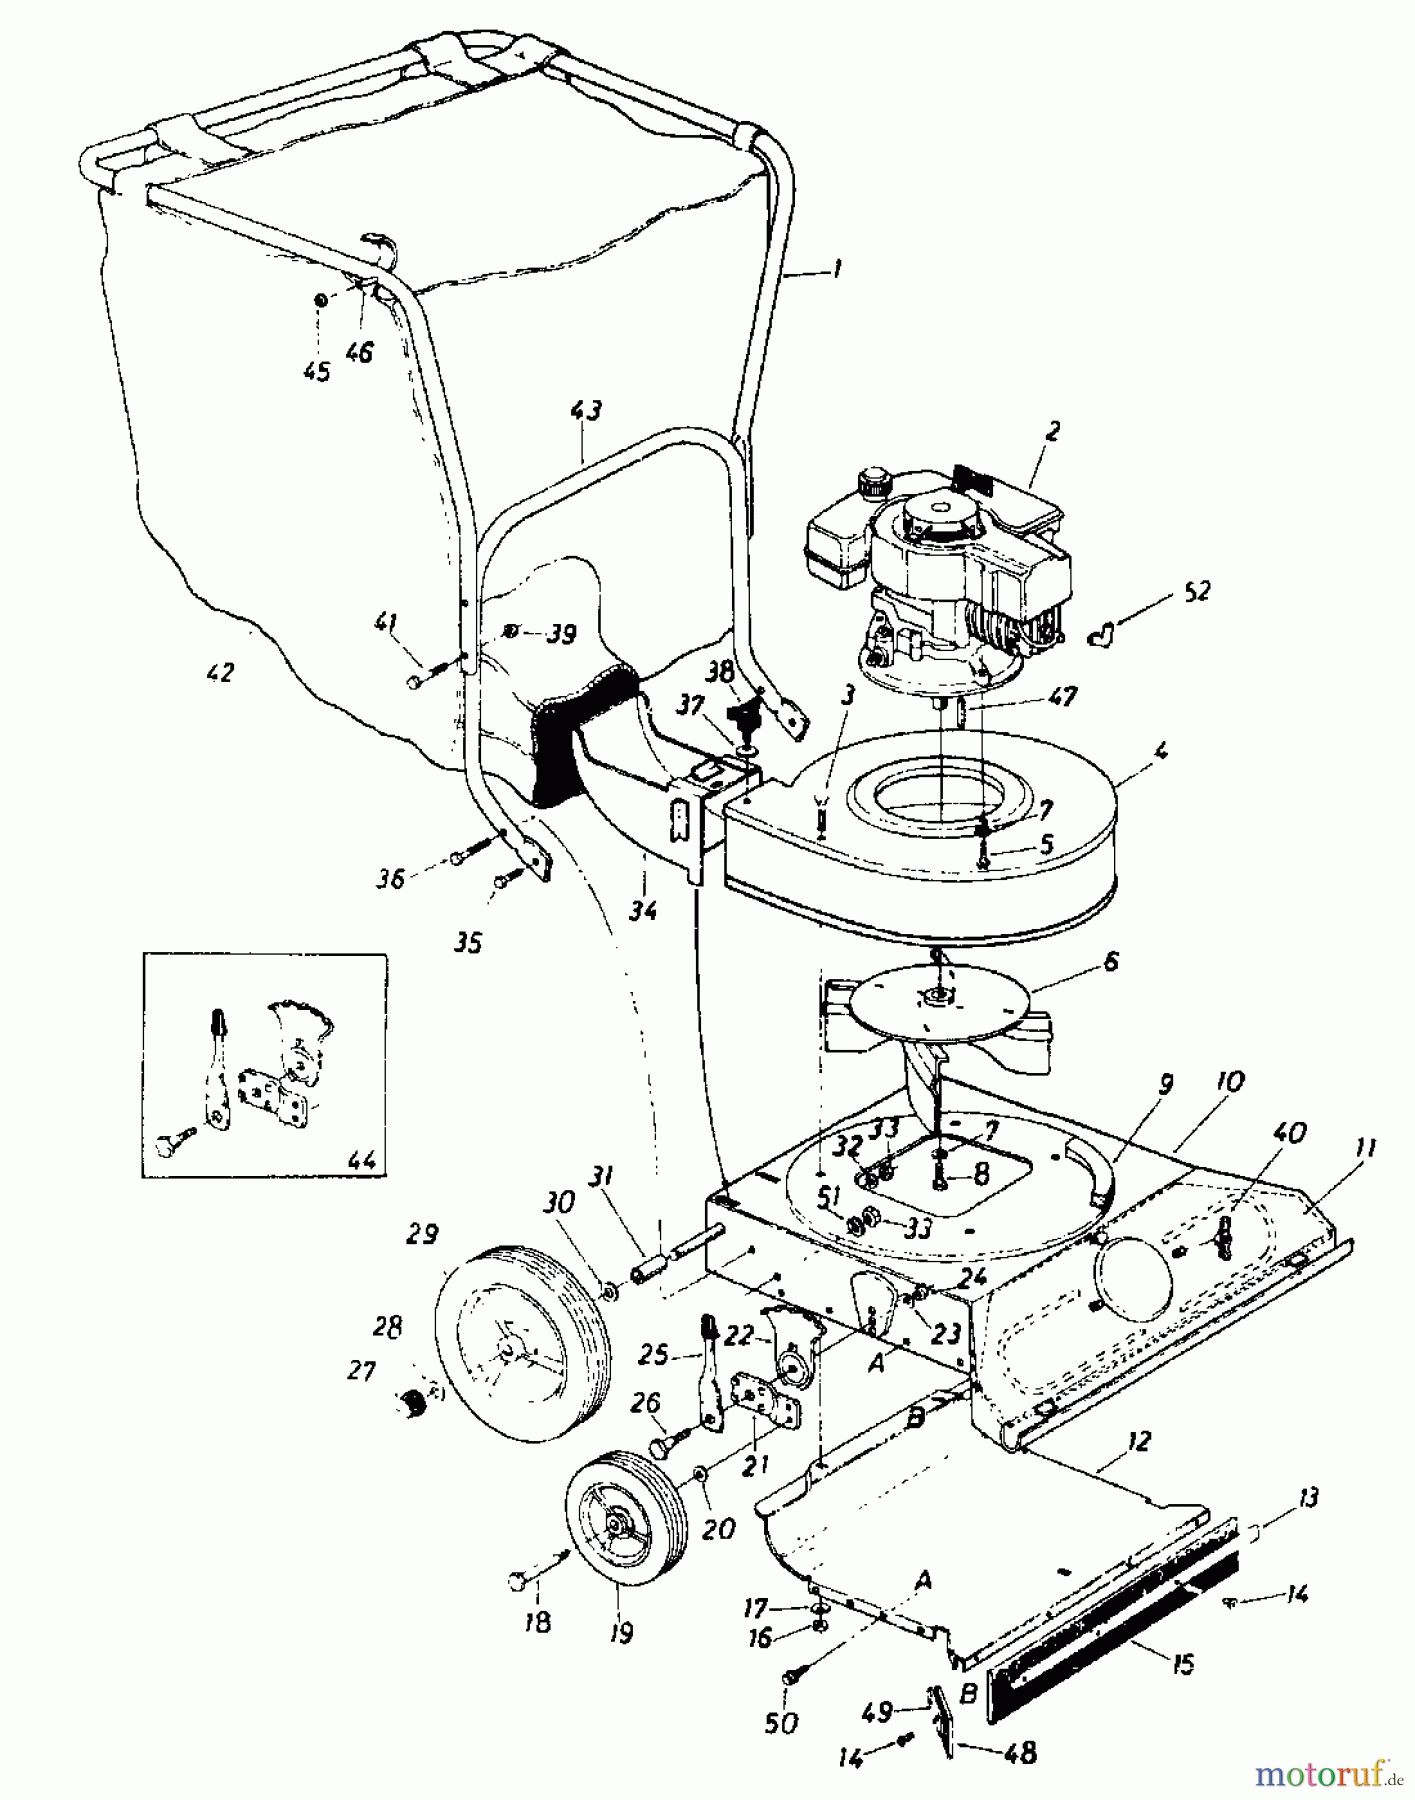  MTD Leaf blower, Blower vac Air-Vac 660 241-6600  (1991) Basic machine